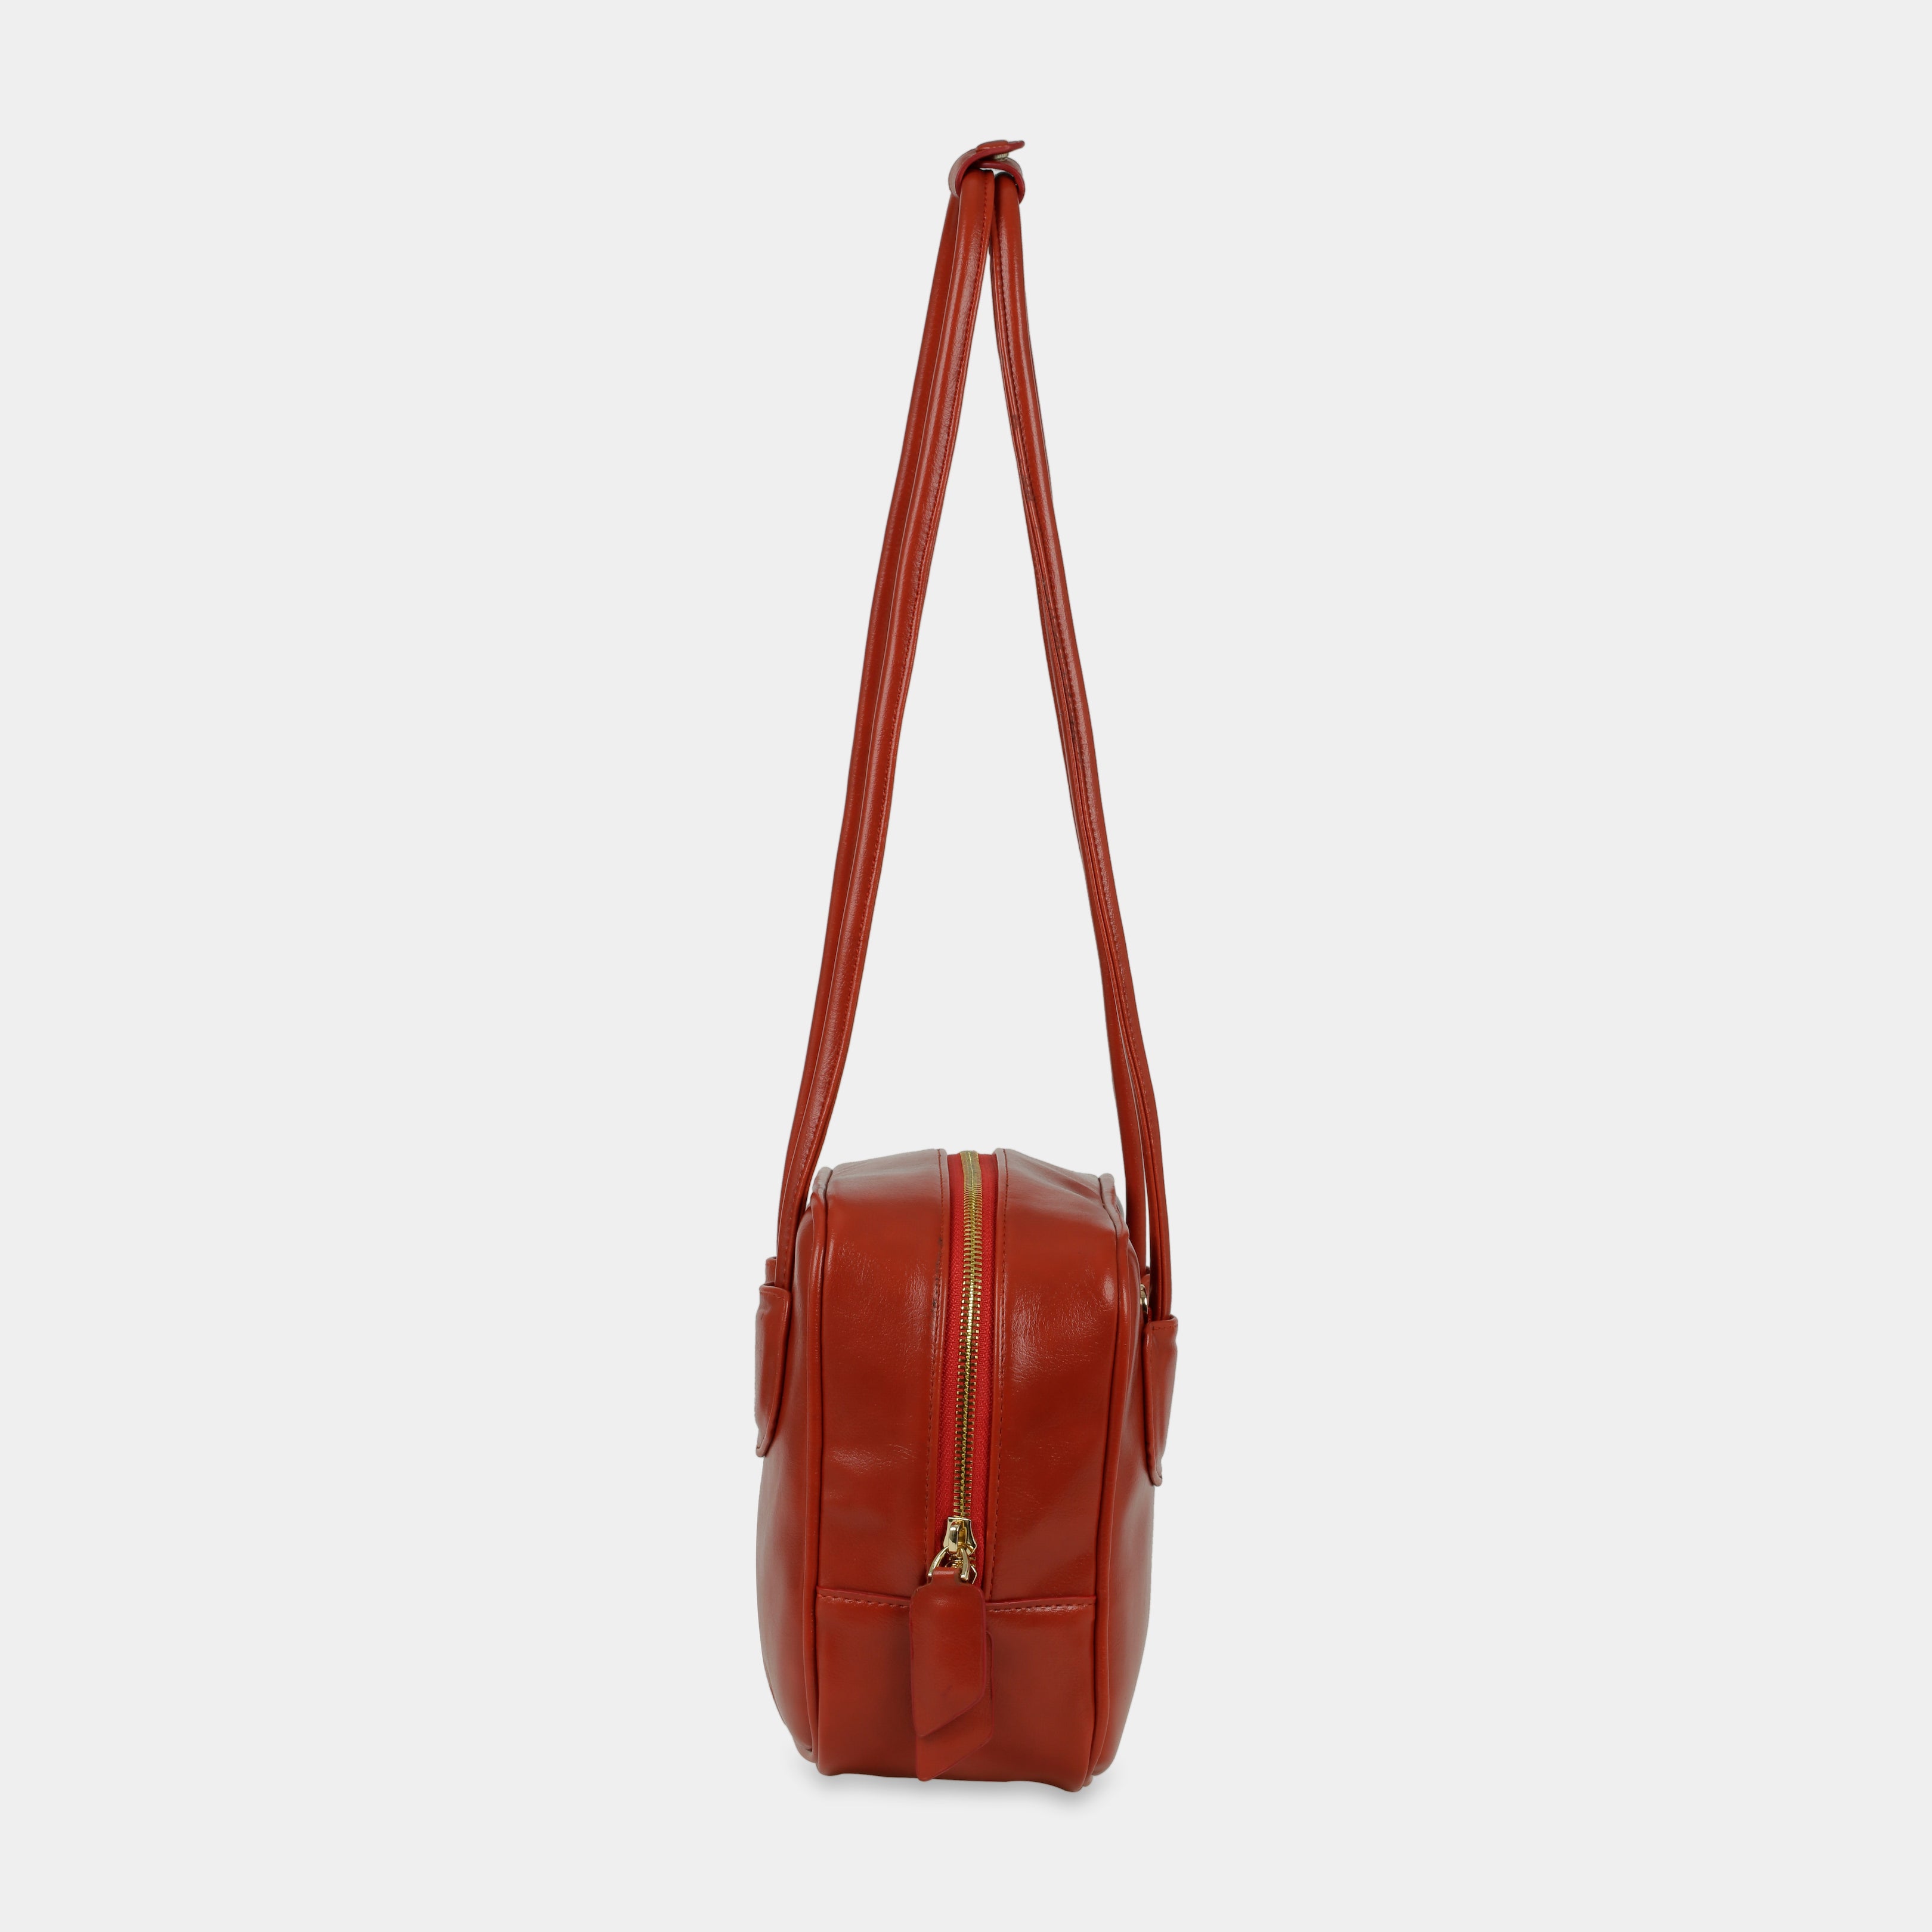 Red SANDWICH handbag